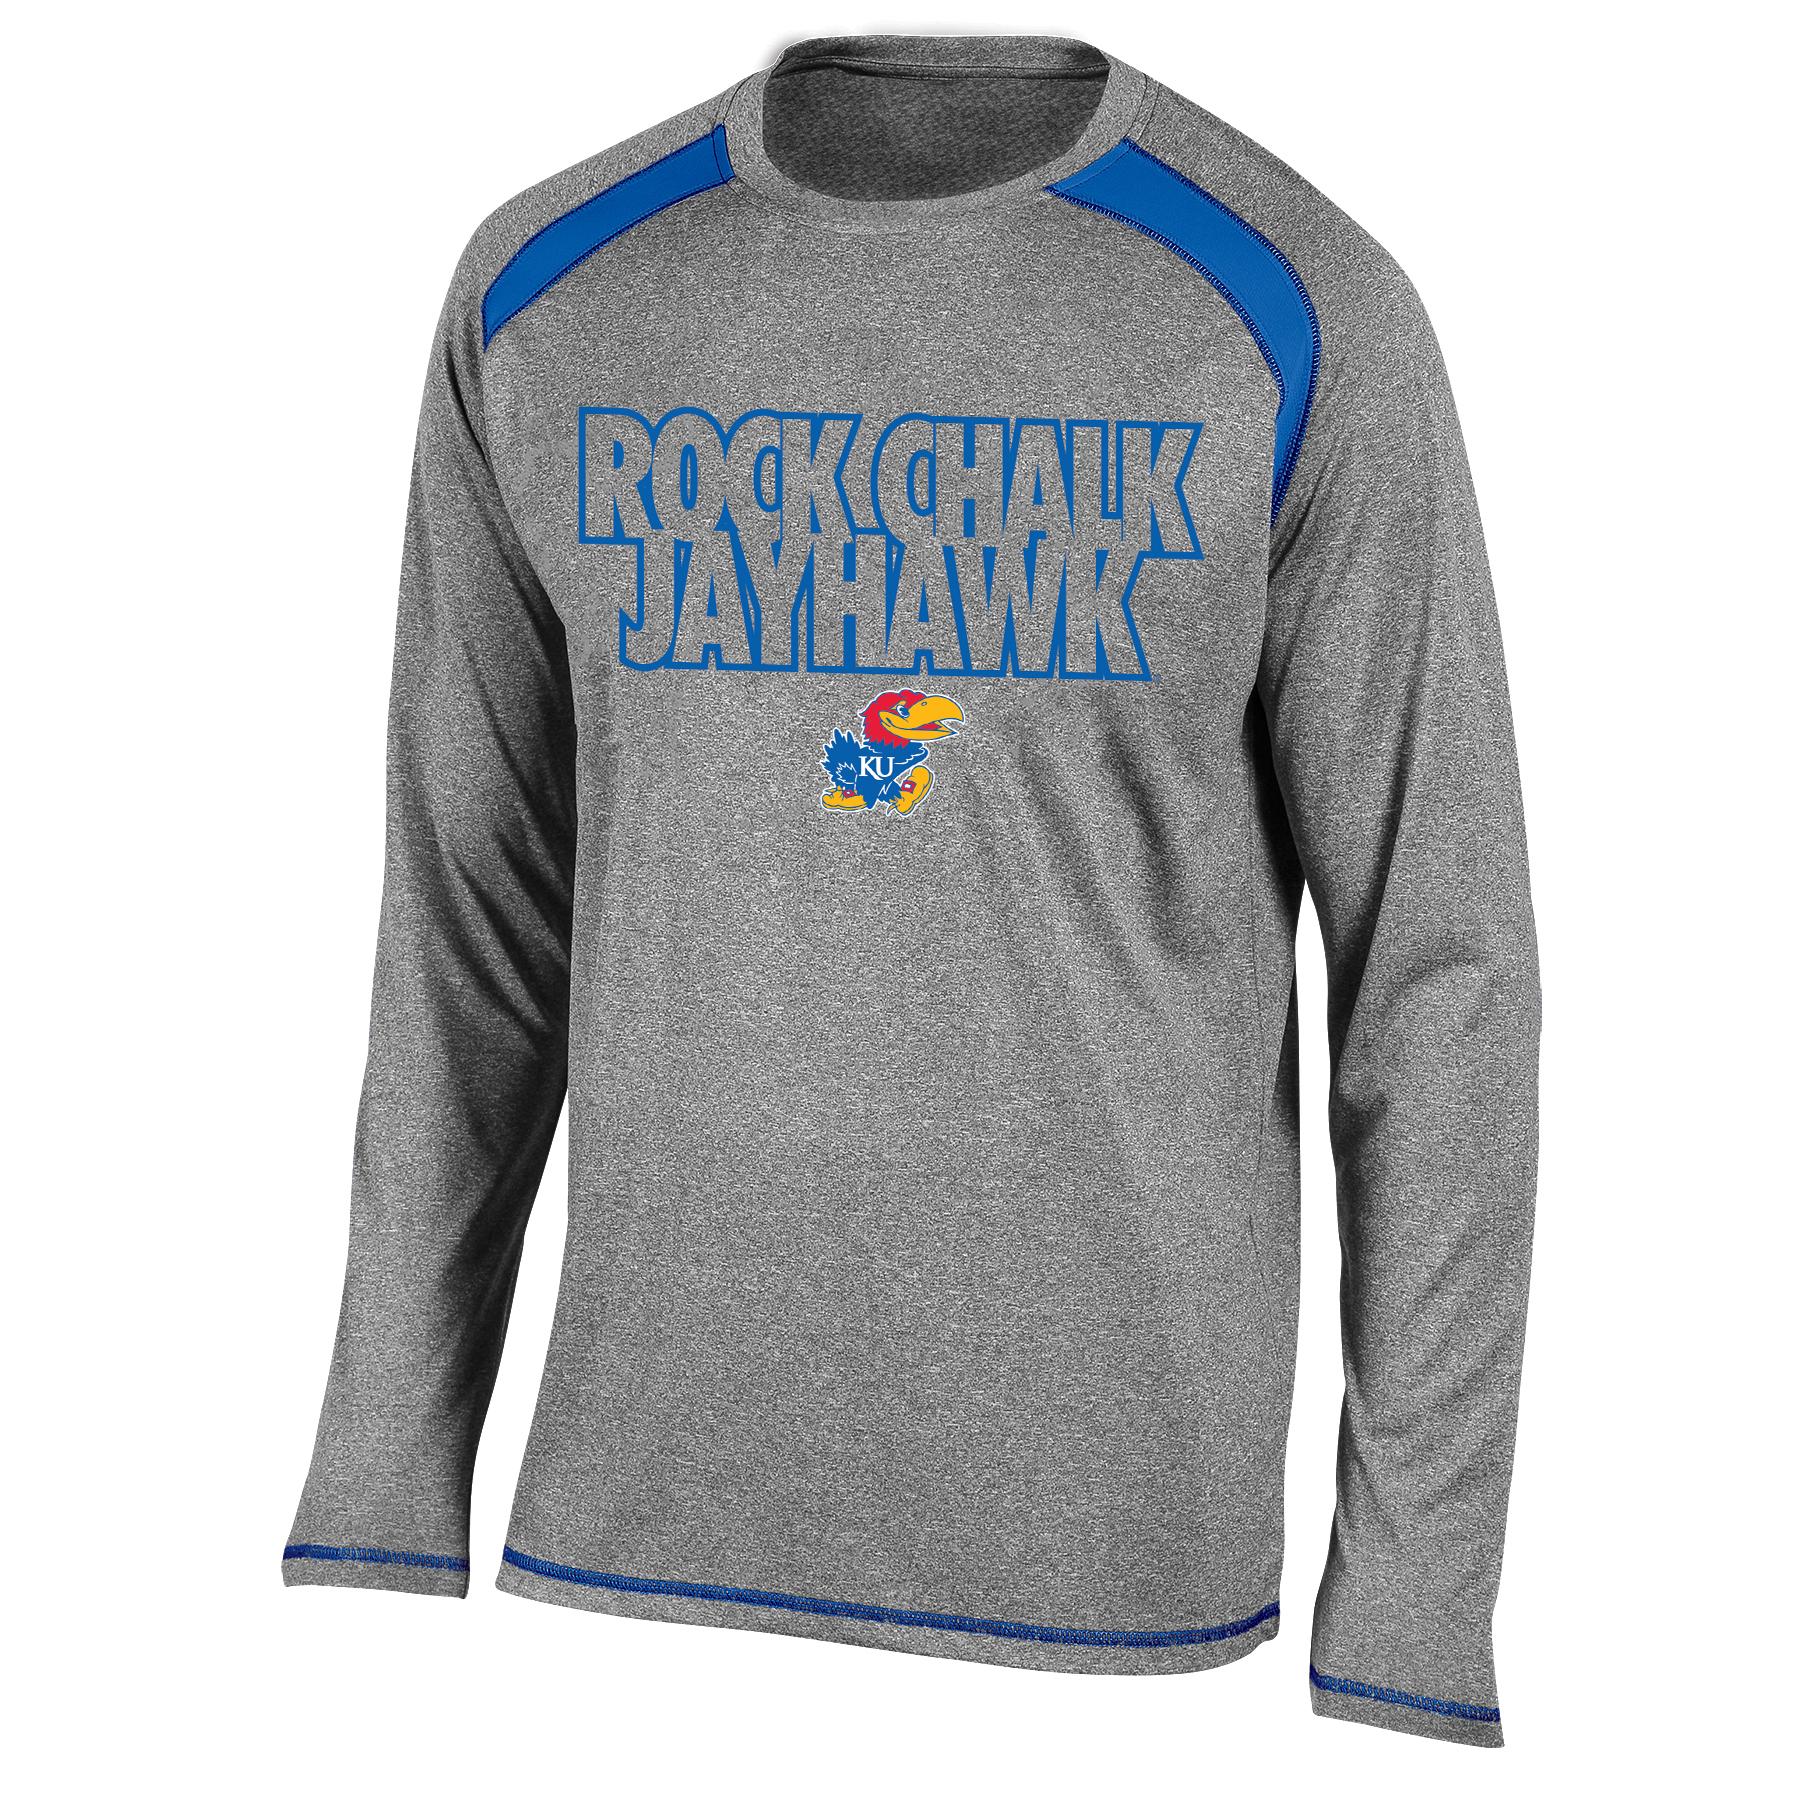 NCAA Men's Big & Tall Athletic Shirt - University of Kansas Jayhawks